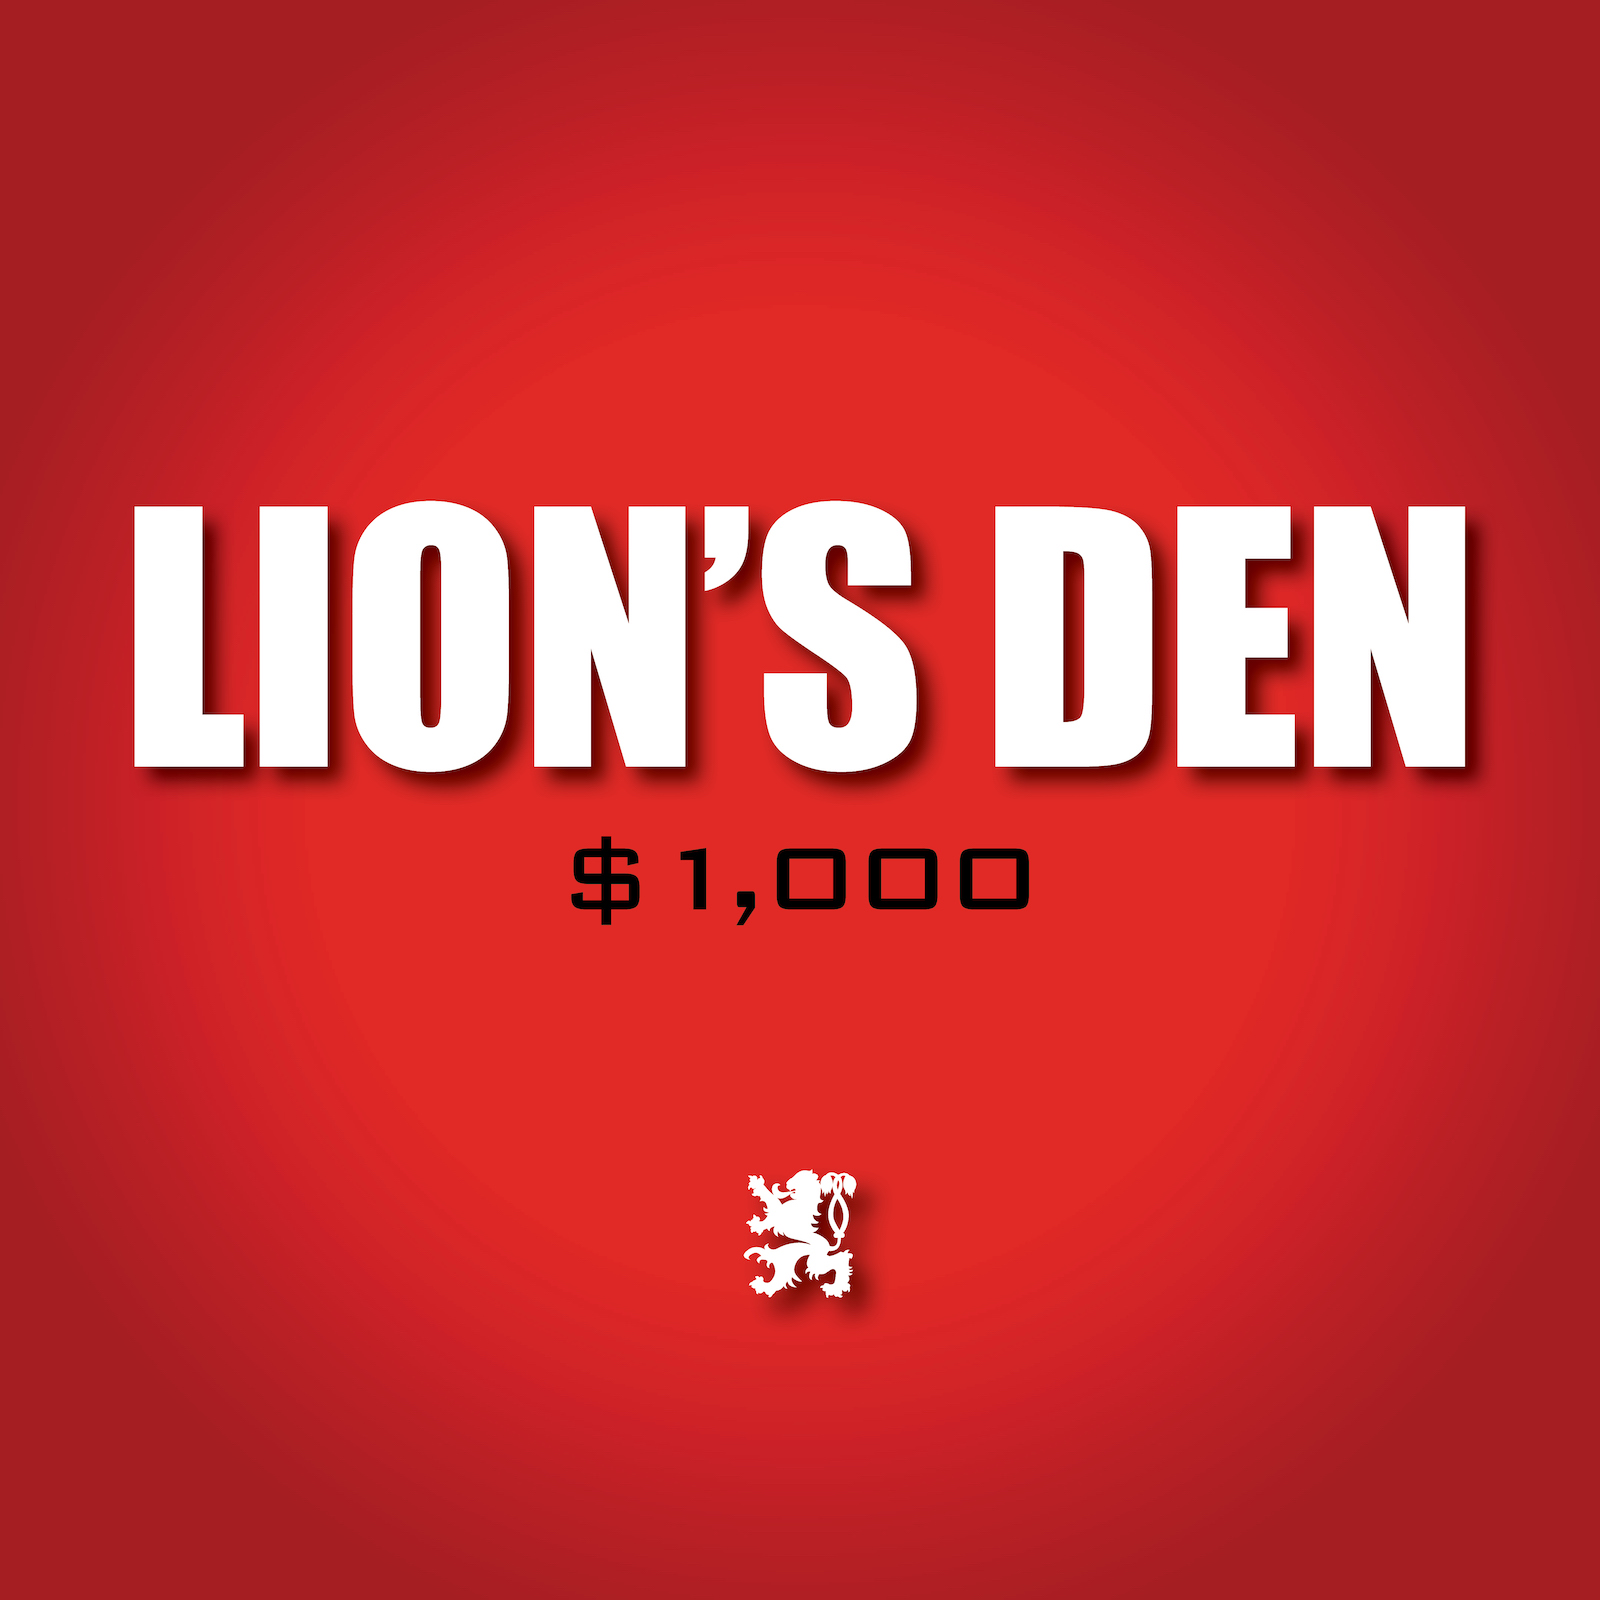 Lion's Den - $1,000